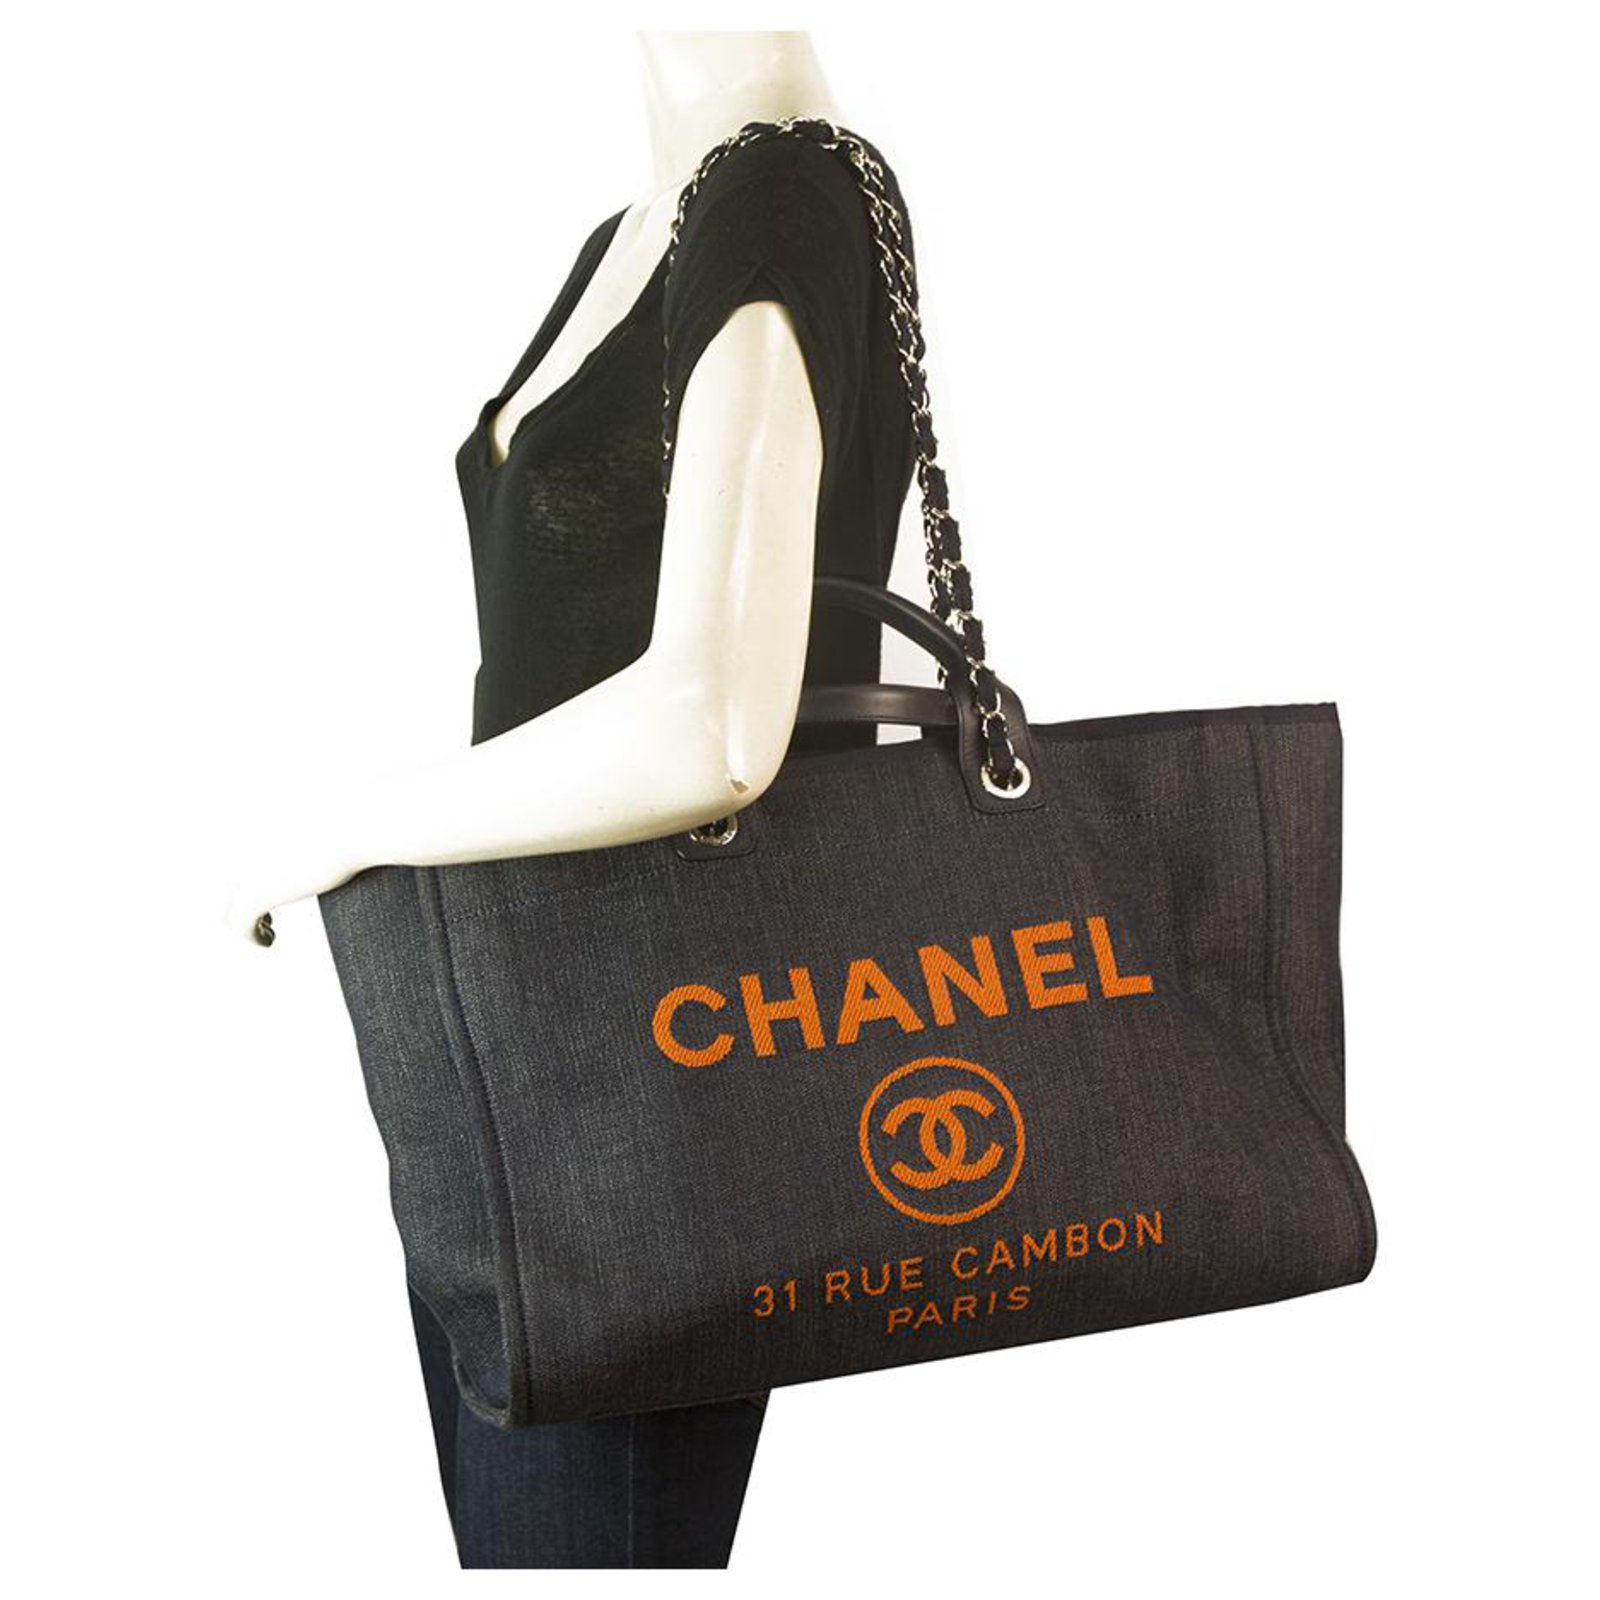 Chanel Large Deauville Shopper, Blue/Orange SHW - Laulay Luxury